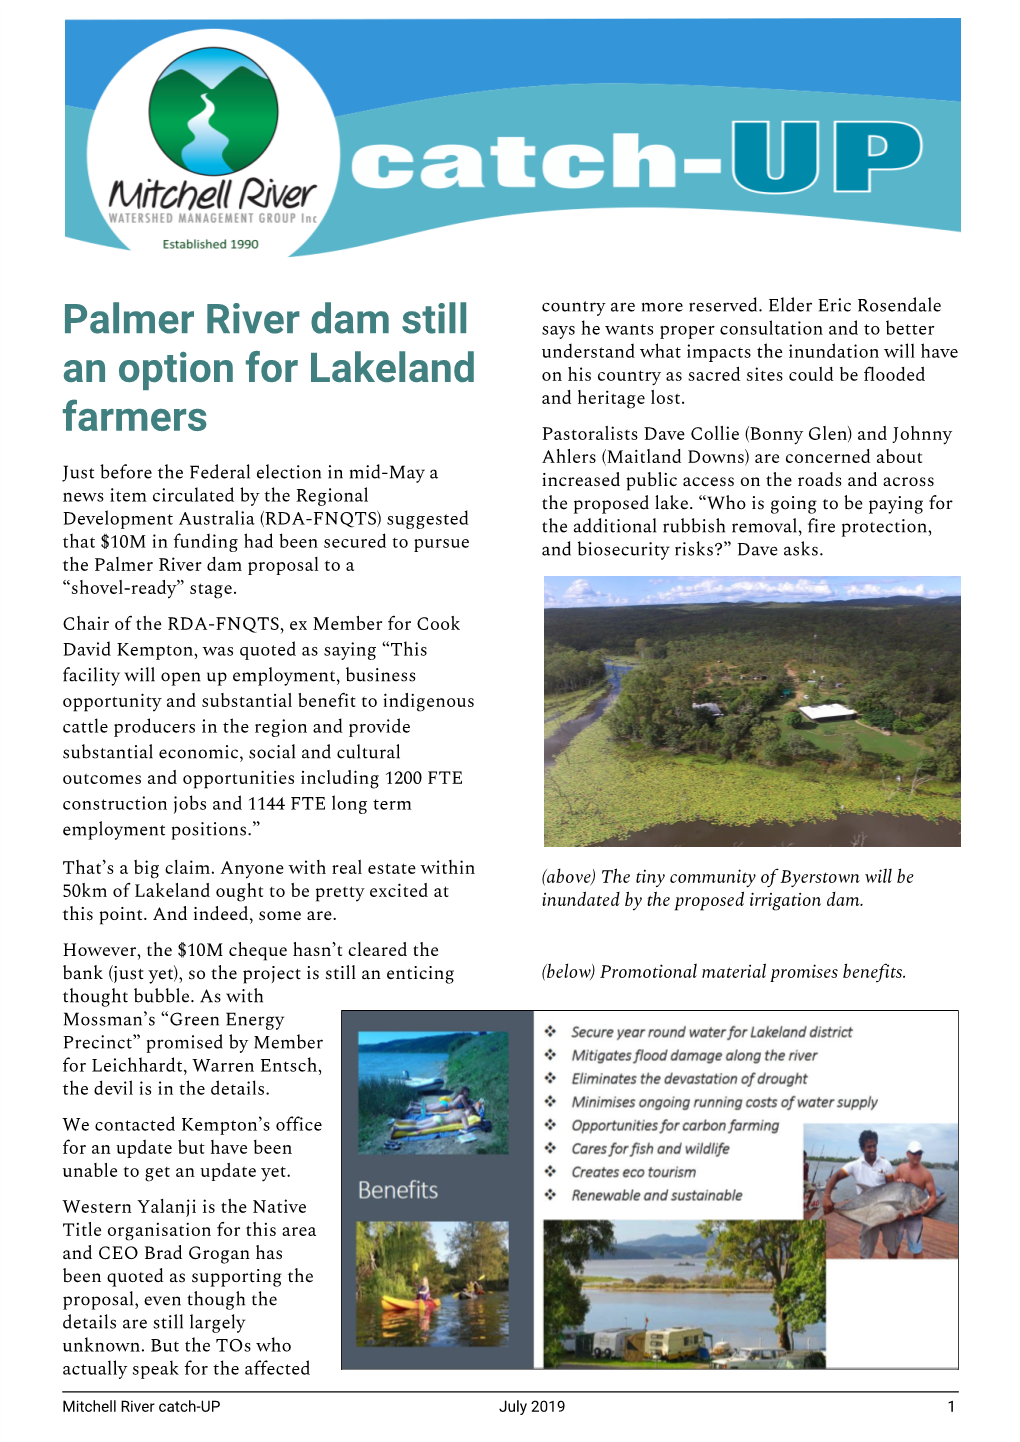 Palmer River Dam Still an Option for Lakeland Farmers